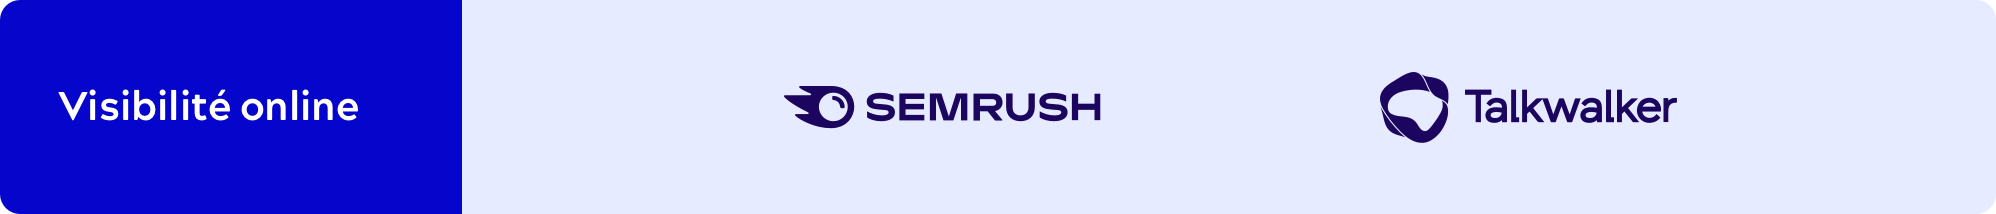 Visibilité online : Semrush, Talkwalker